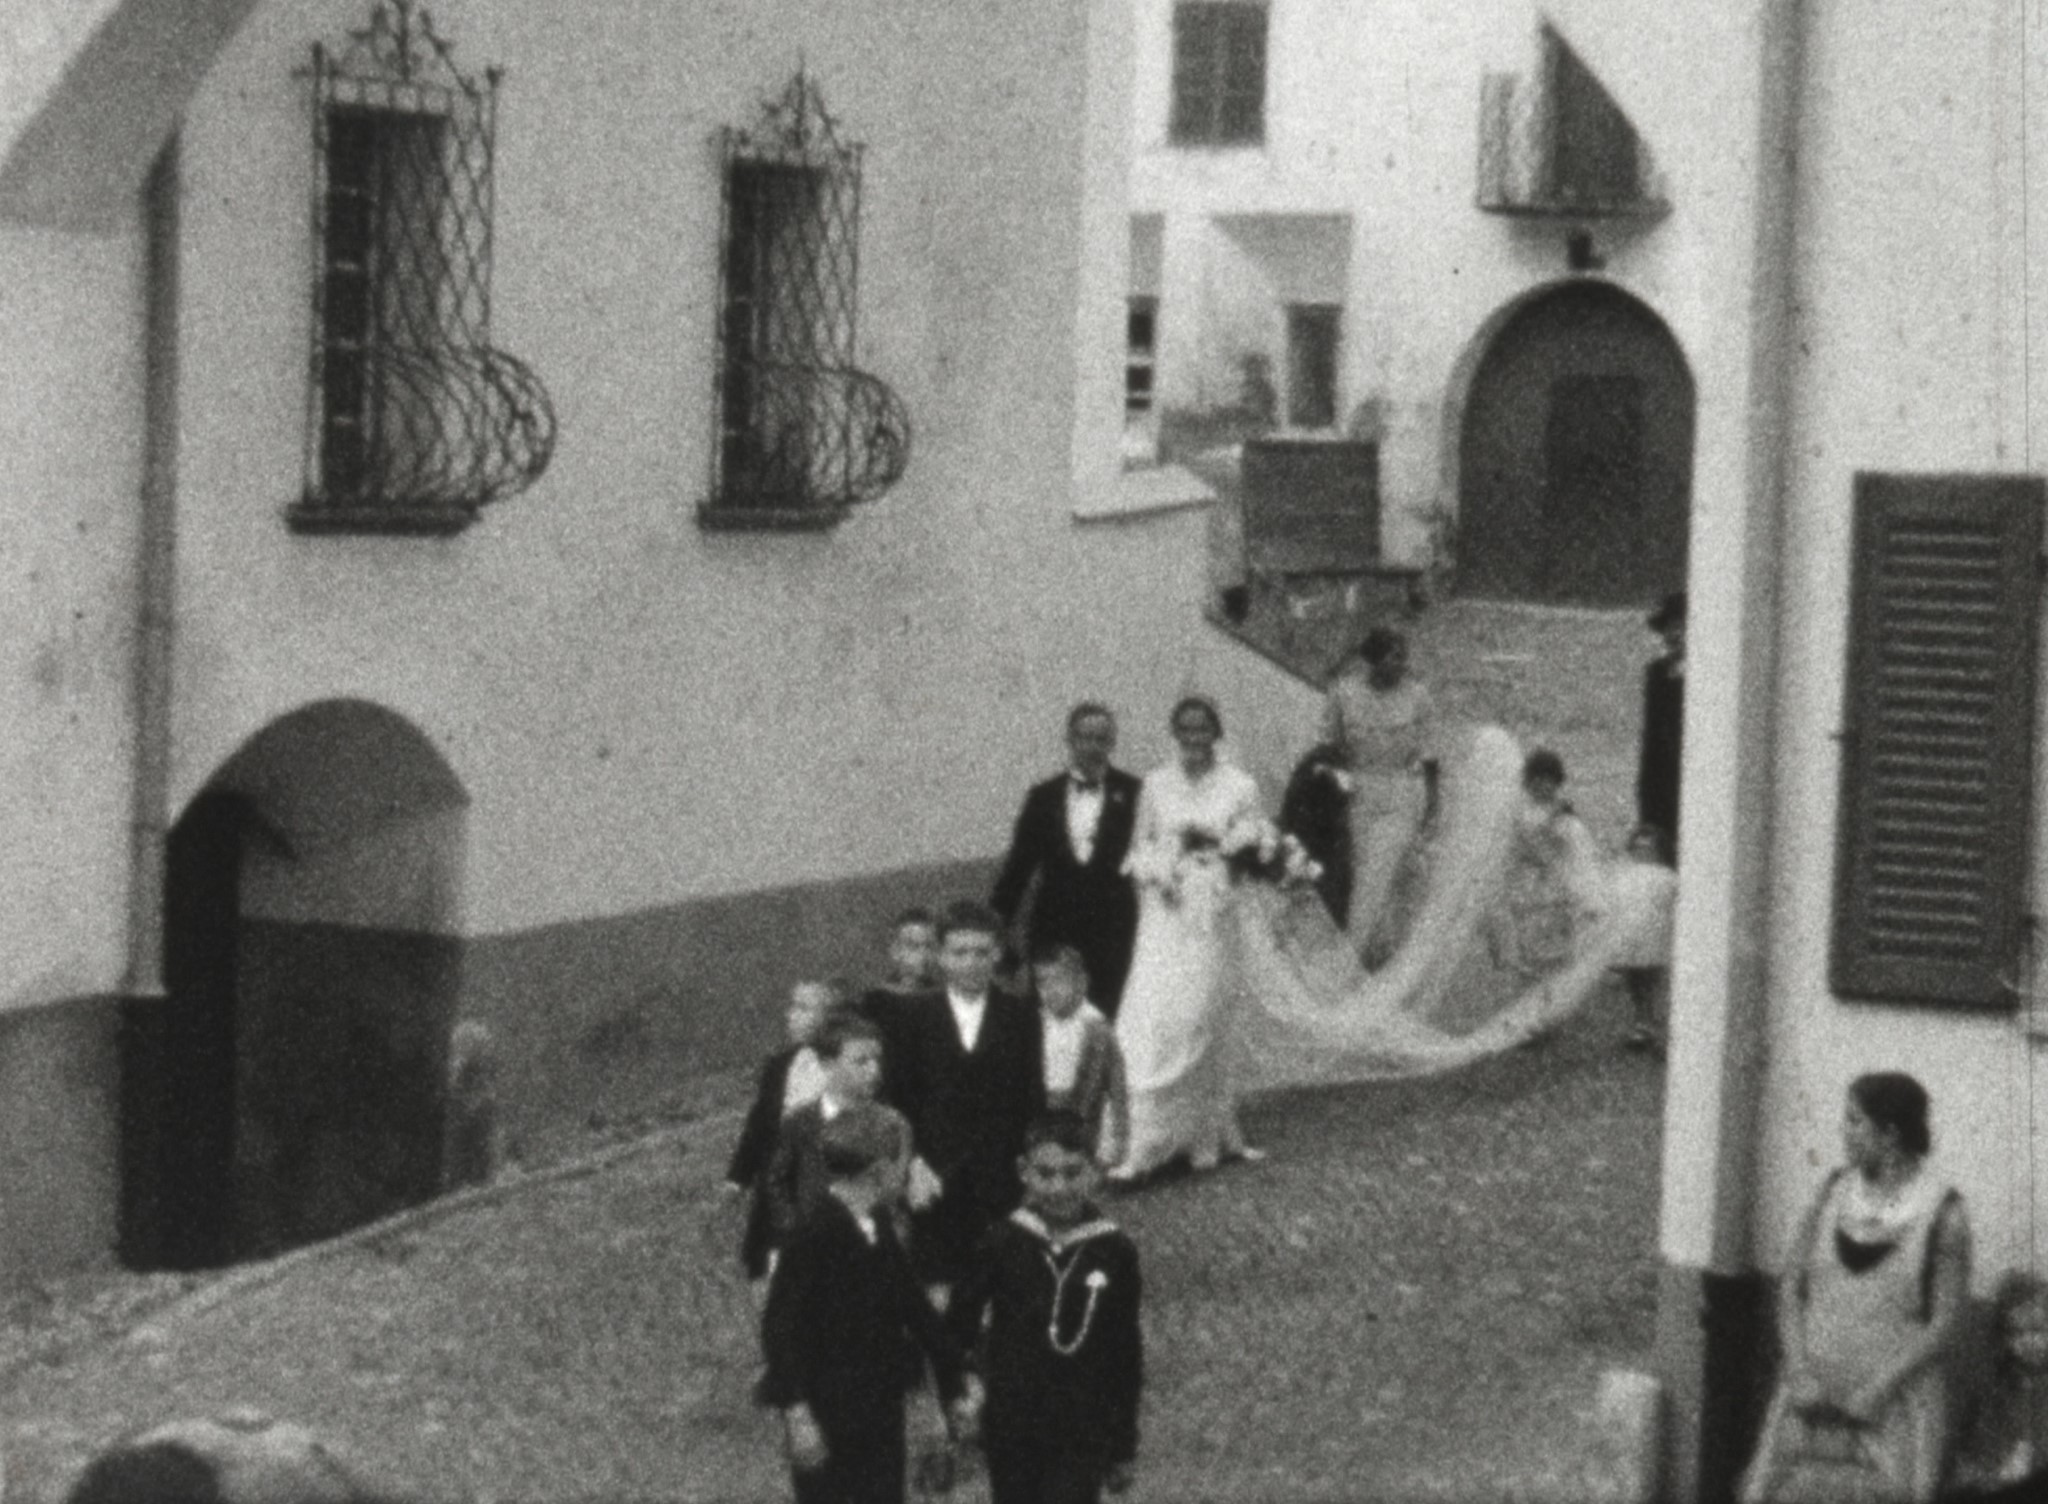 Nozza, Sommer 1935 (1935)